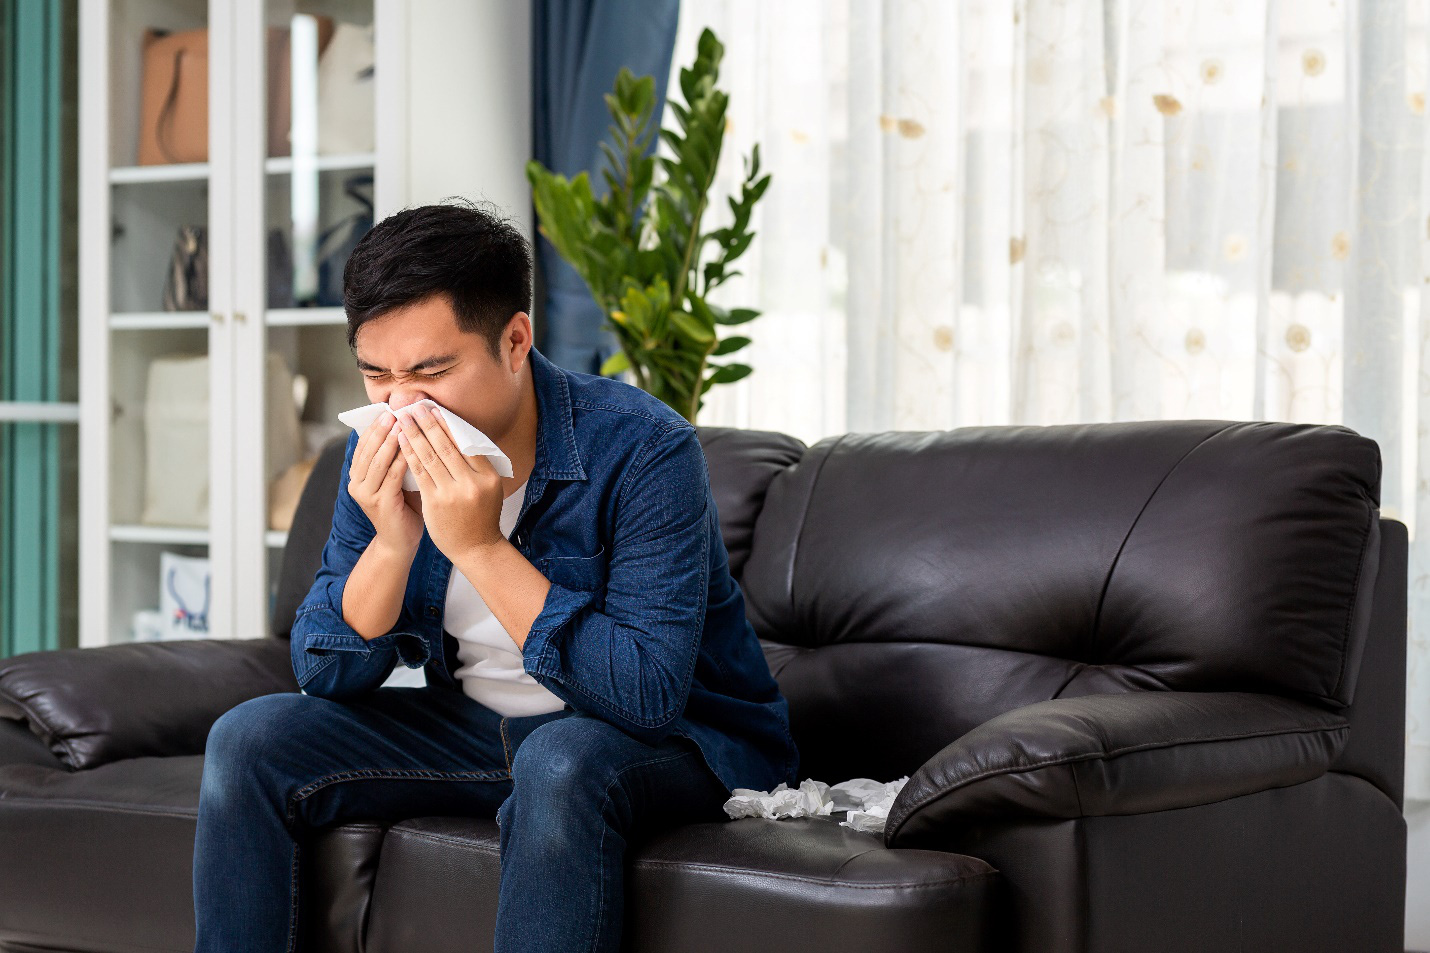 Winter is no longer afraid of allergic rhinitis thanks to choosing 